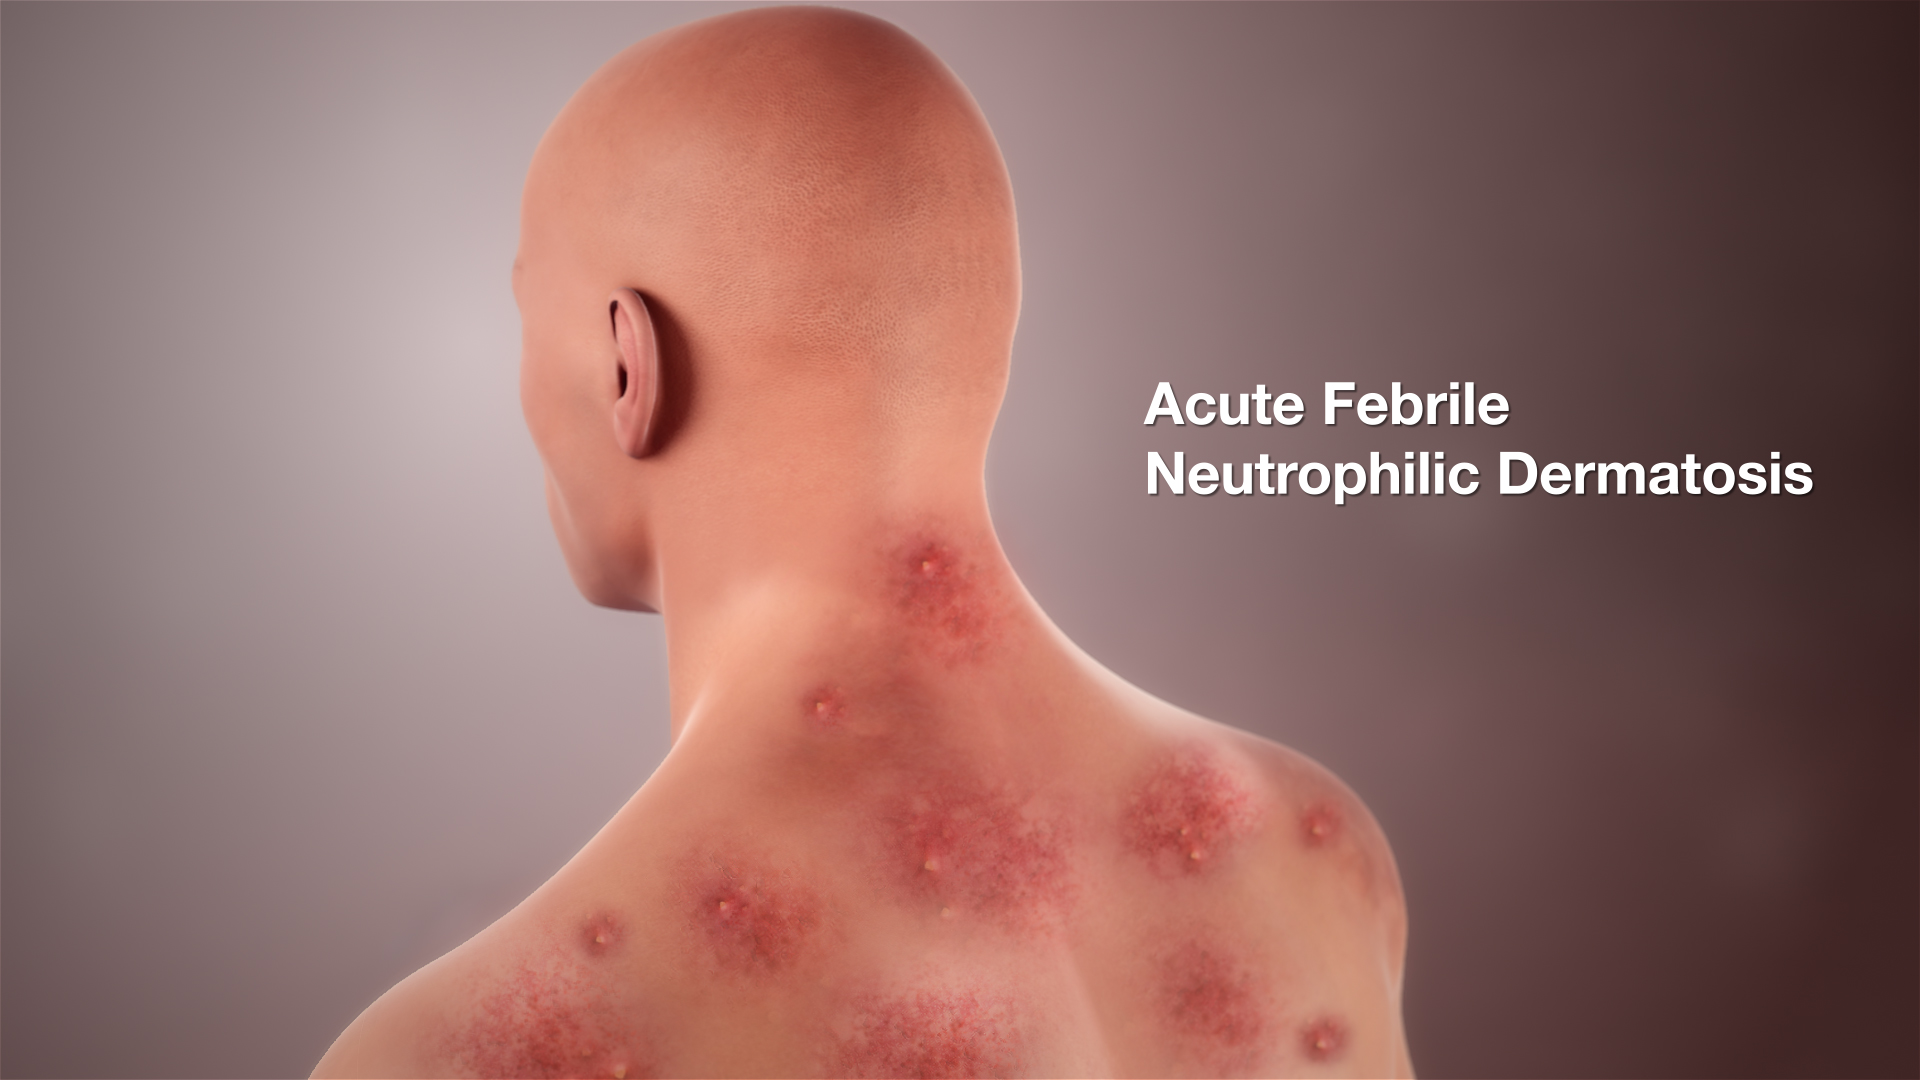 Medical animation still shot showing Acute Febrile Neutrophilic Dermatosis